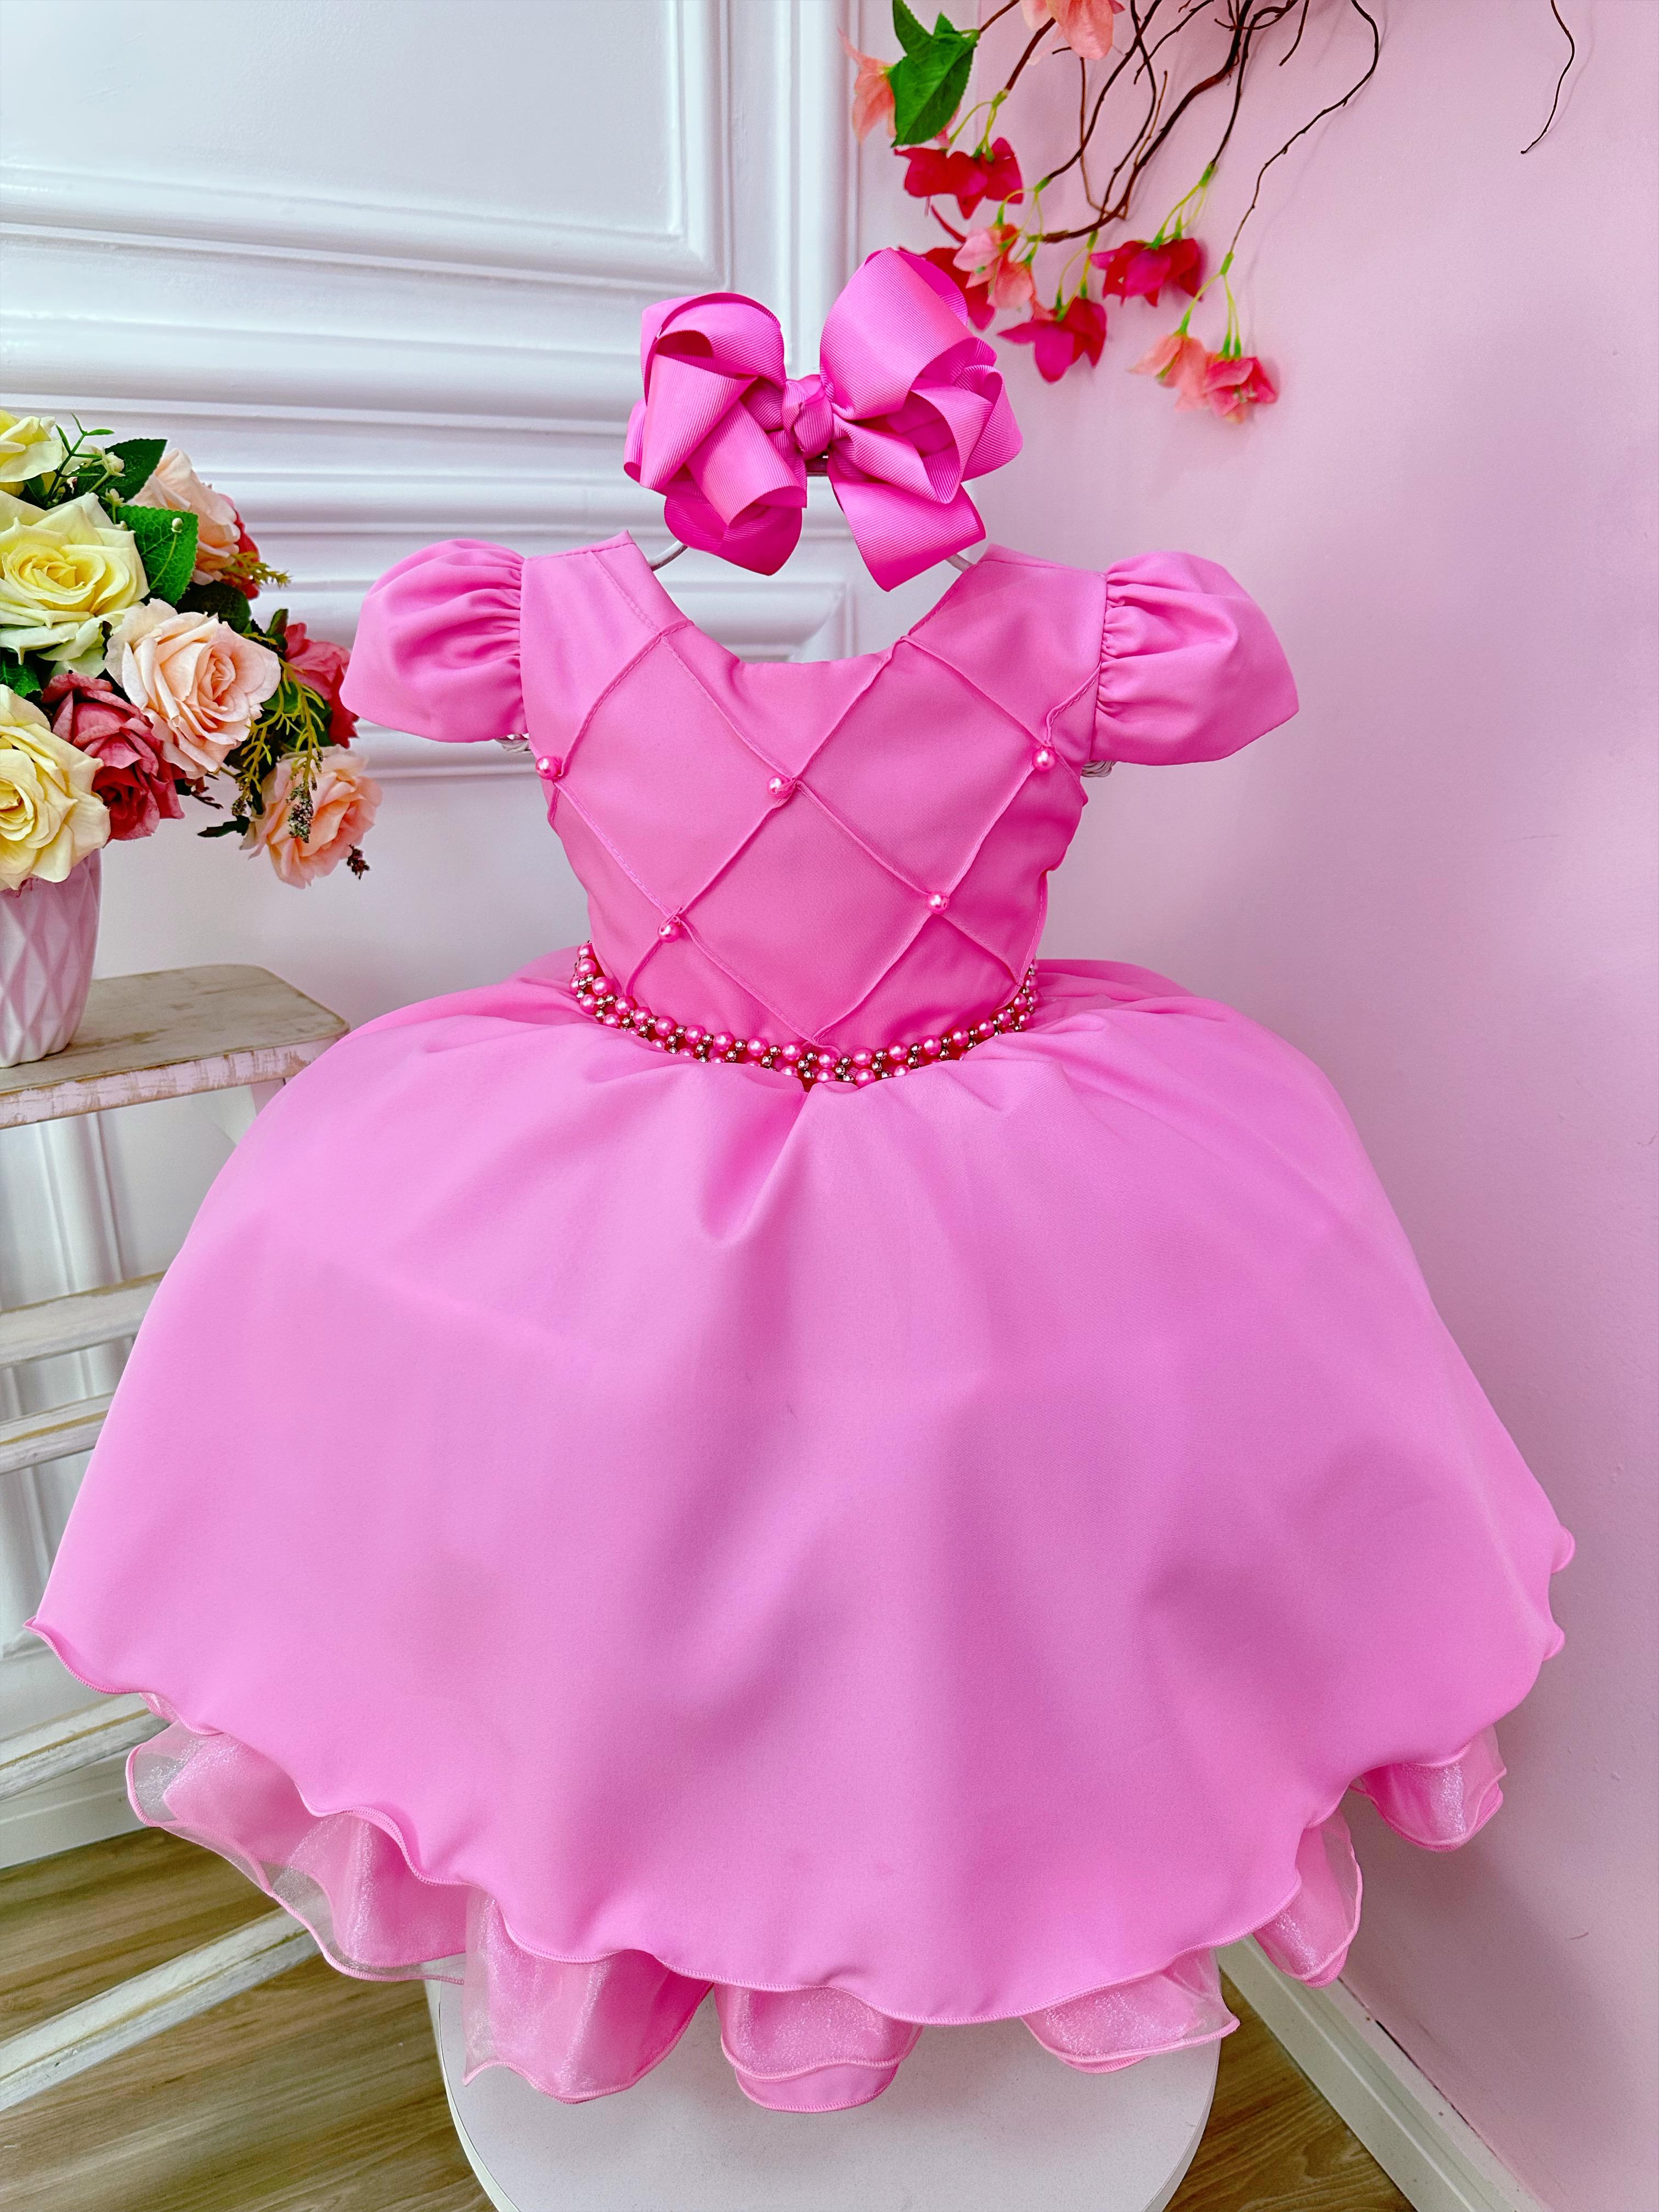 Vestido Infantil Rosa C/ Cinto de Pérolas Casamento Luxo